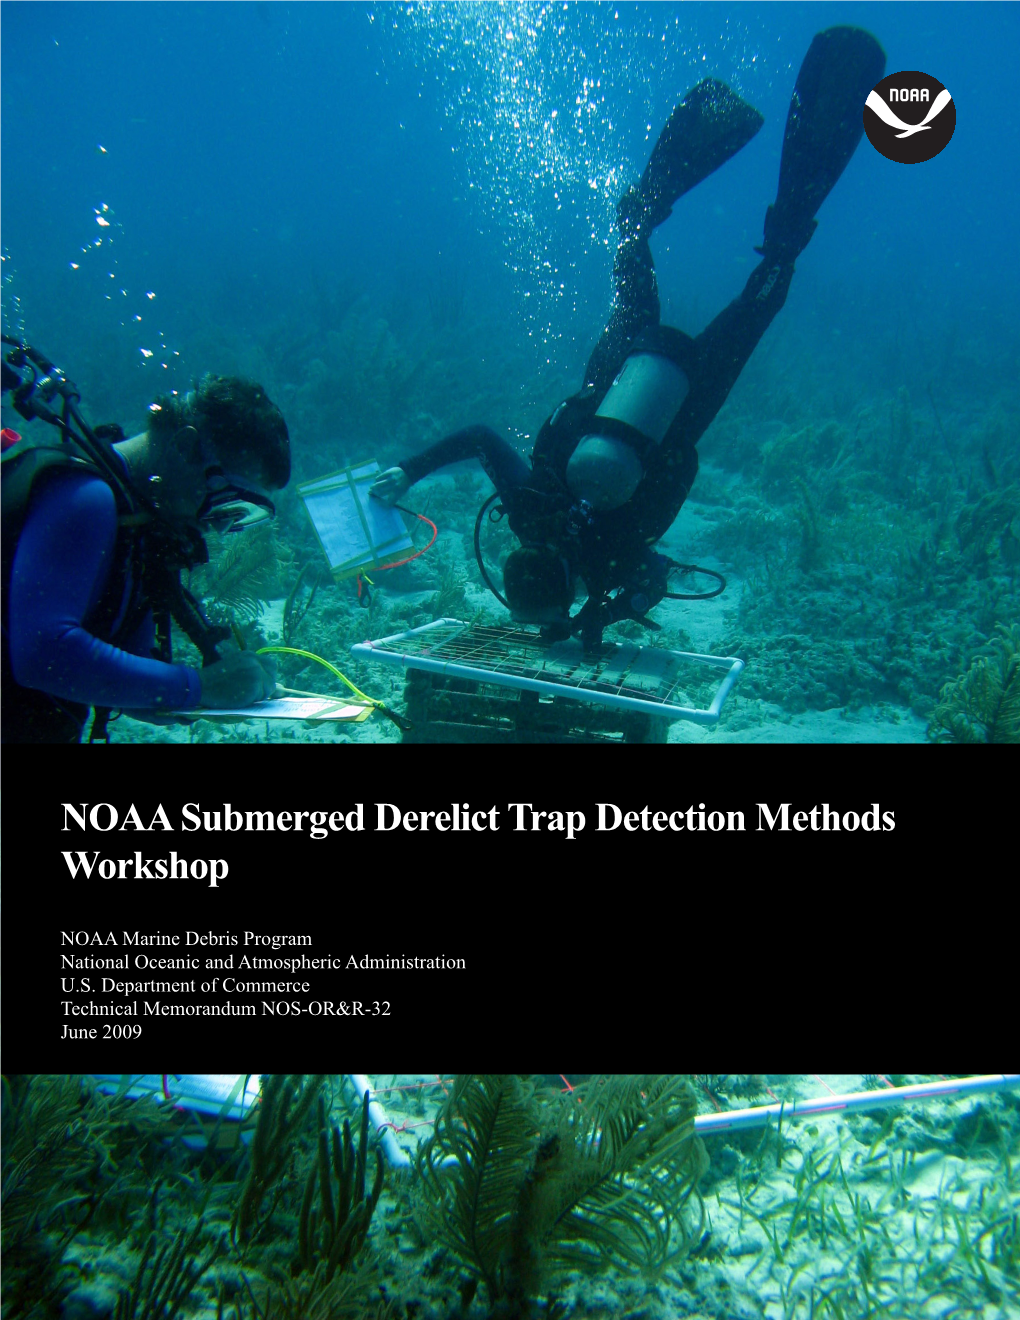 Submerged Derelict Trap Detection Methods Workshop, 2009